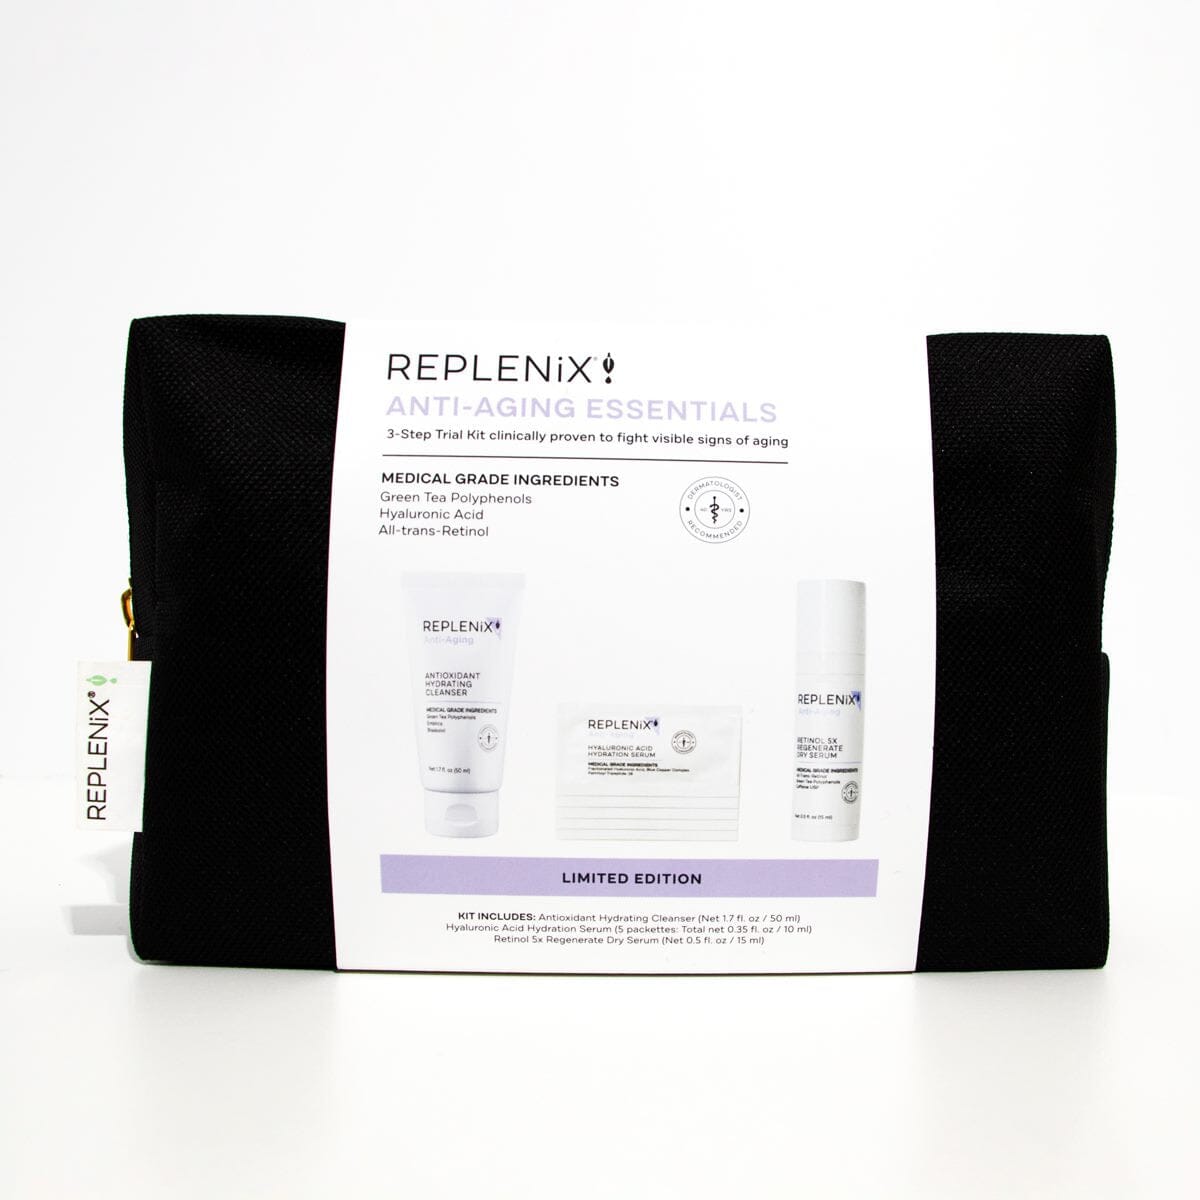 Replenix Anti-Aging Essentials 3 Step Trial Kit Replenix Shop at Exclusive Beauty Club